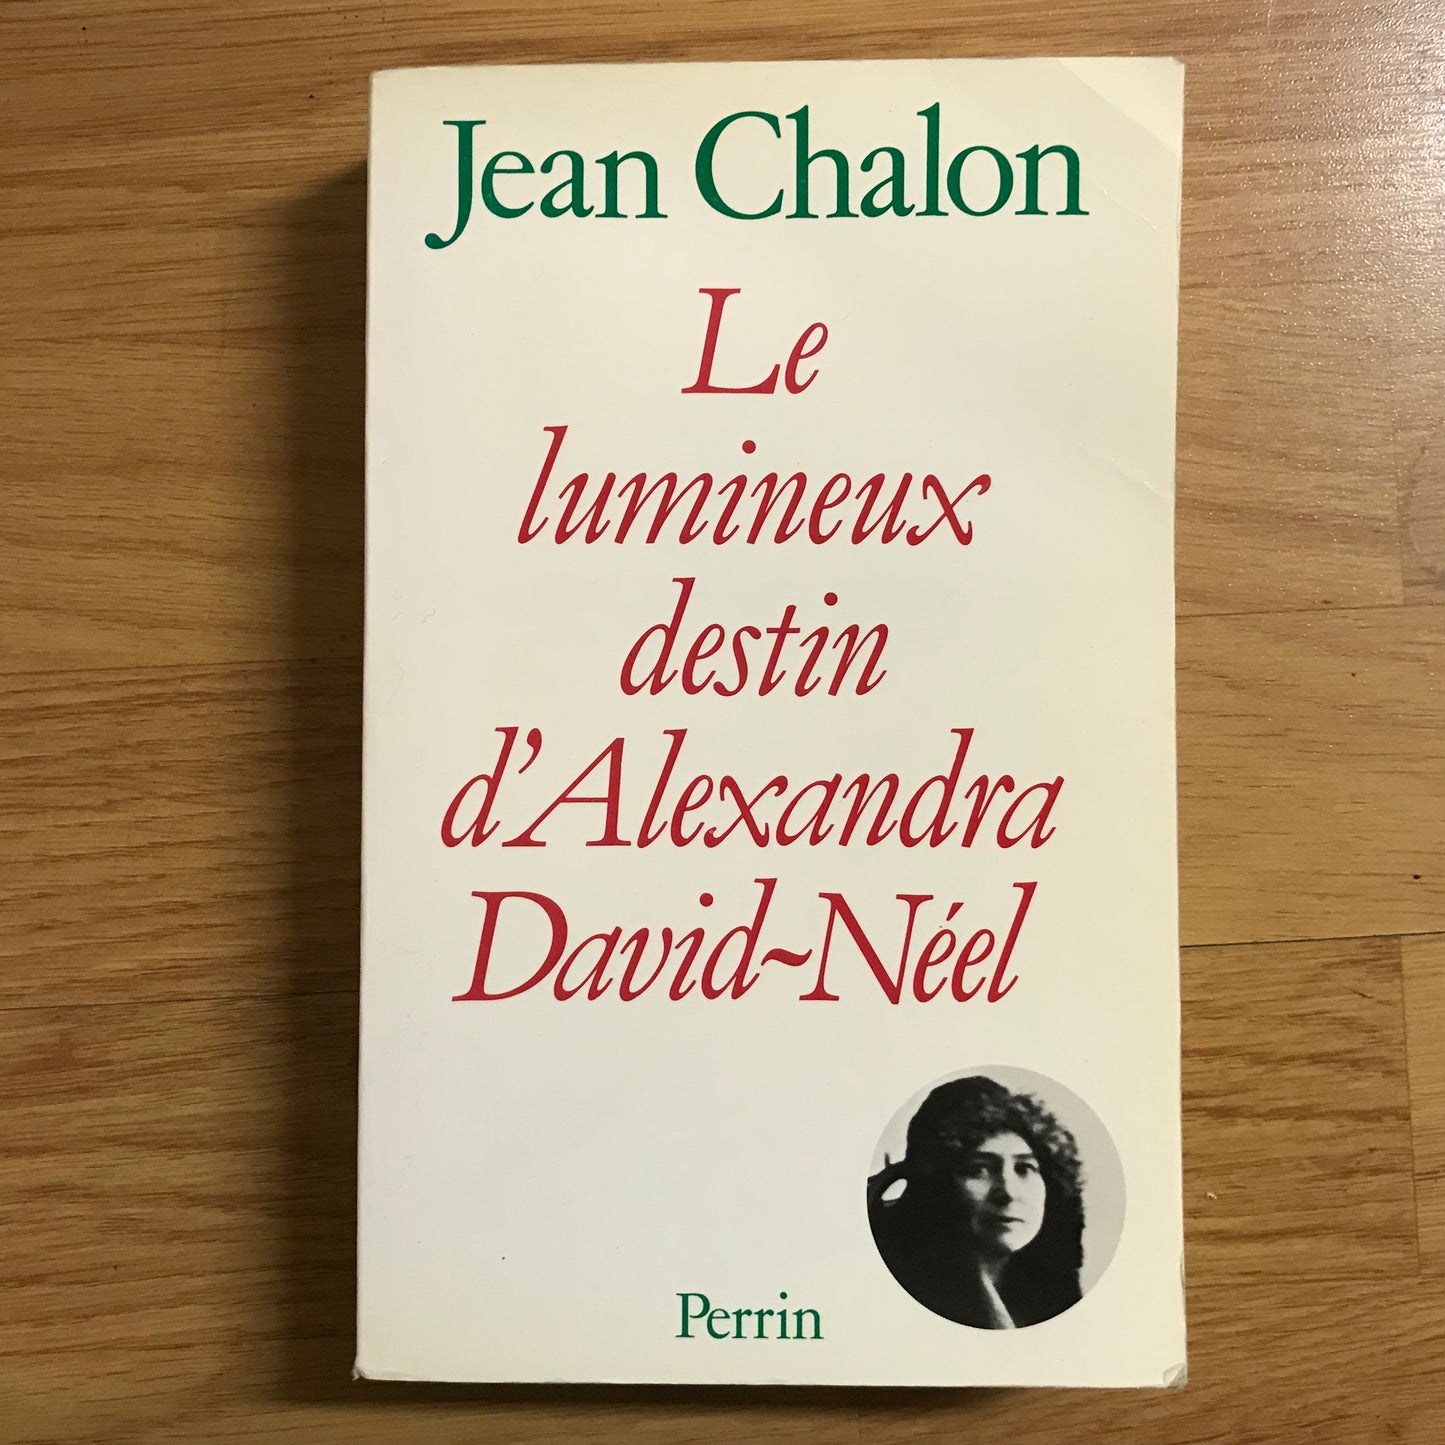 Chapon, Jean - Le lumineux destin d’Alexandra David-Neel